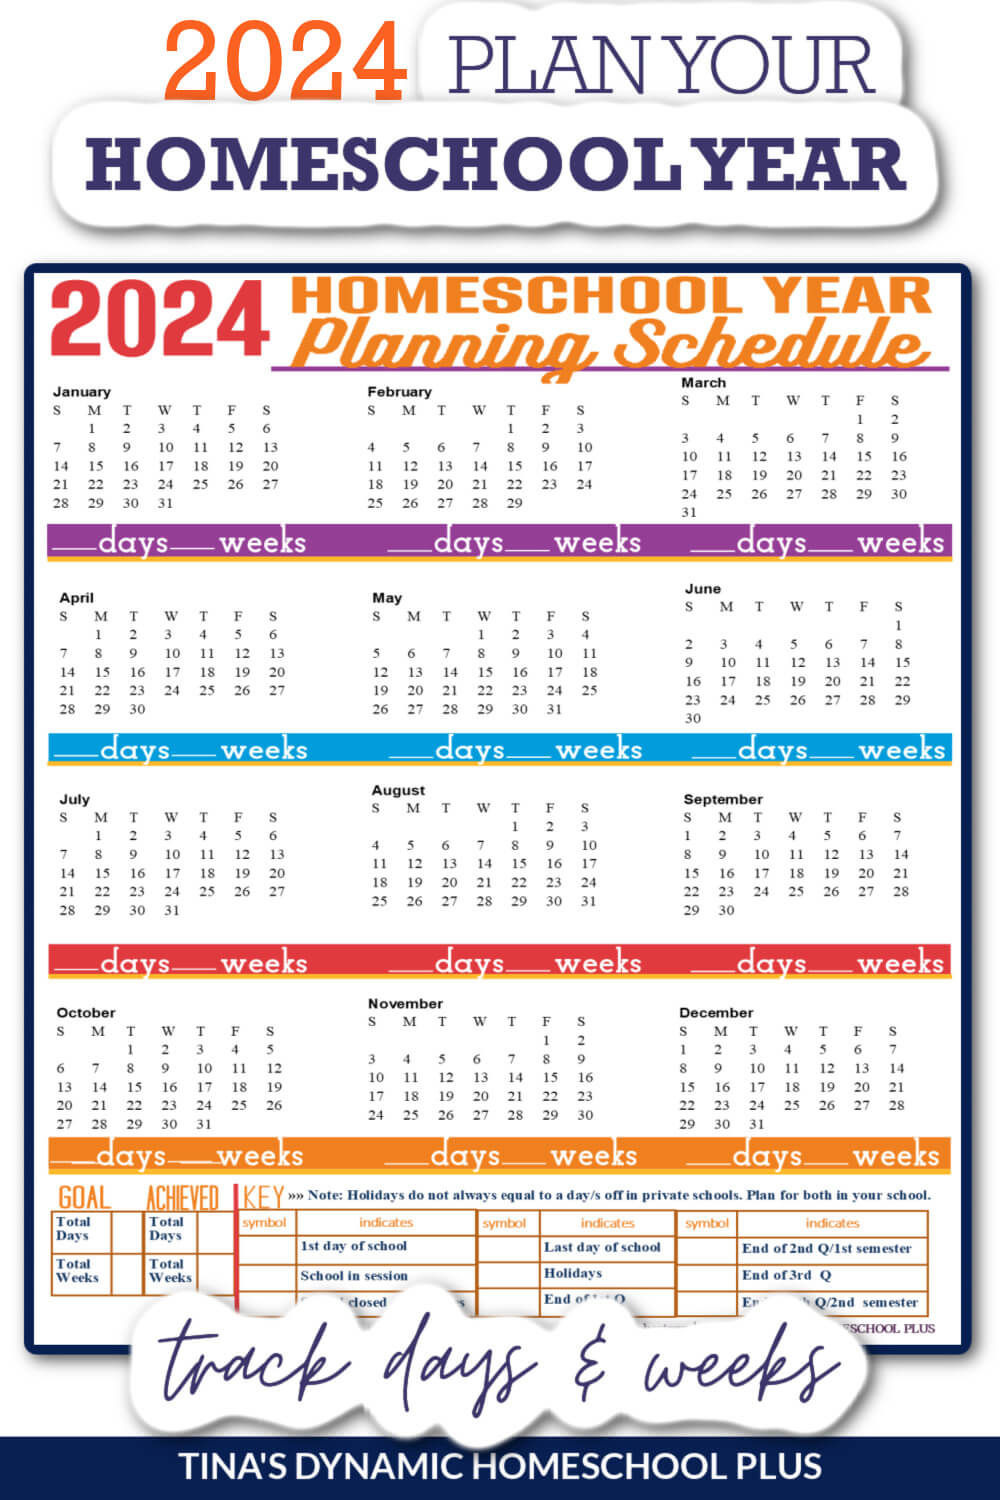 Year 2024 Homeschool Planning Schedule Beautiful Form At Tinas Dynamic Homeschool Plus 